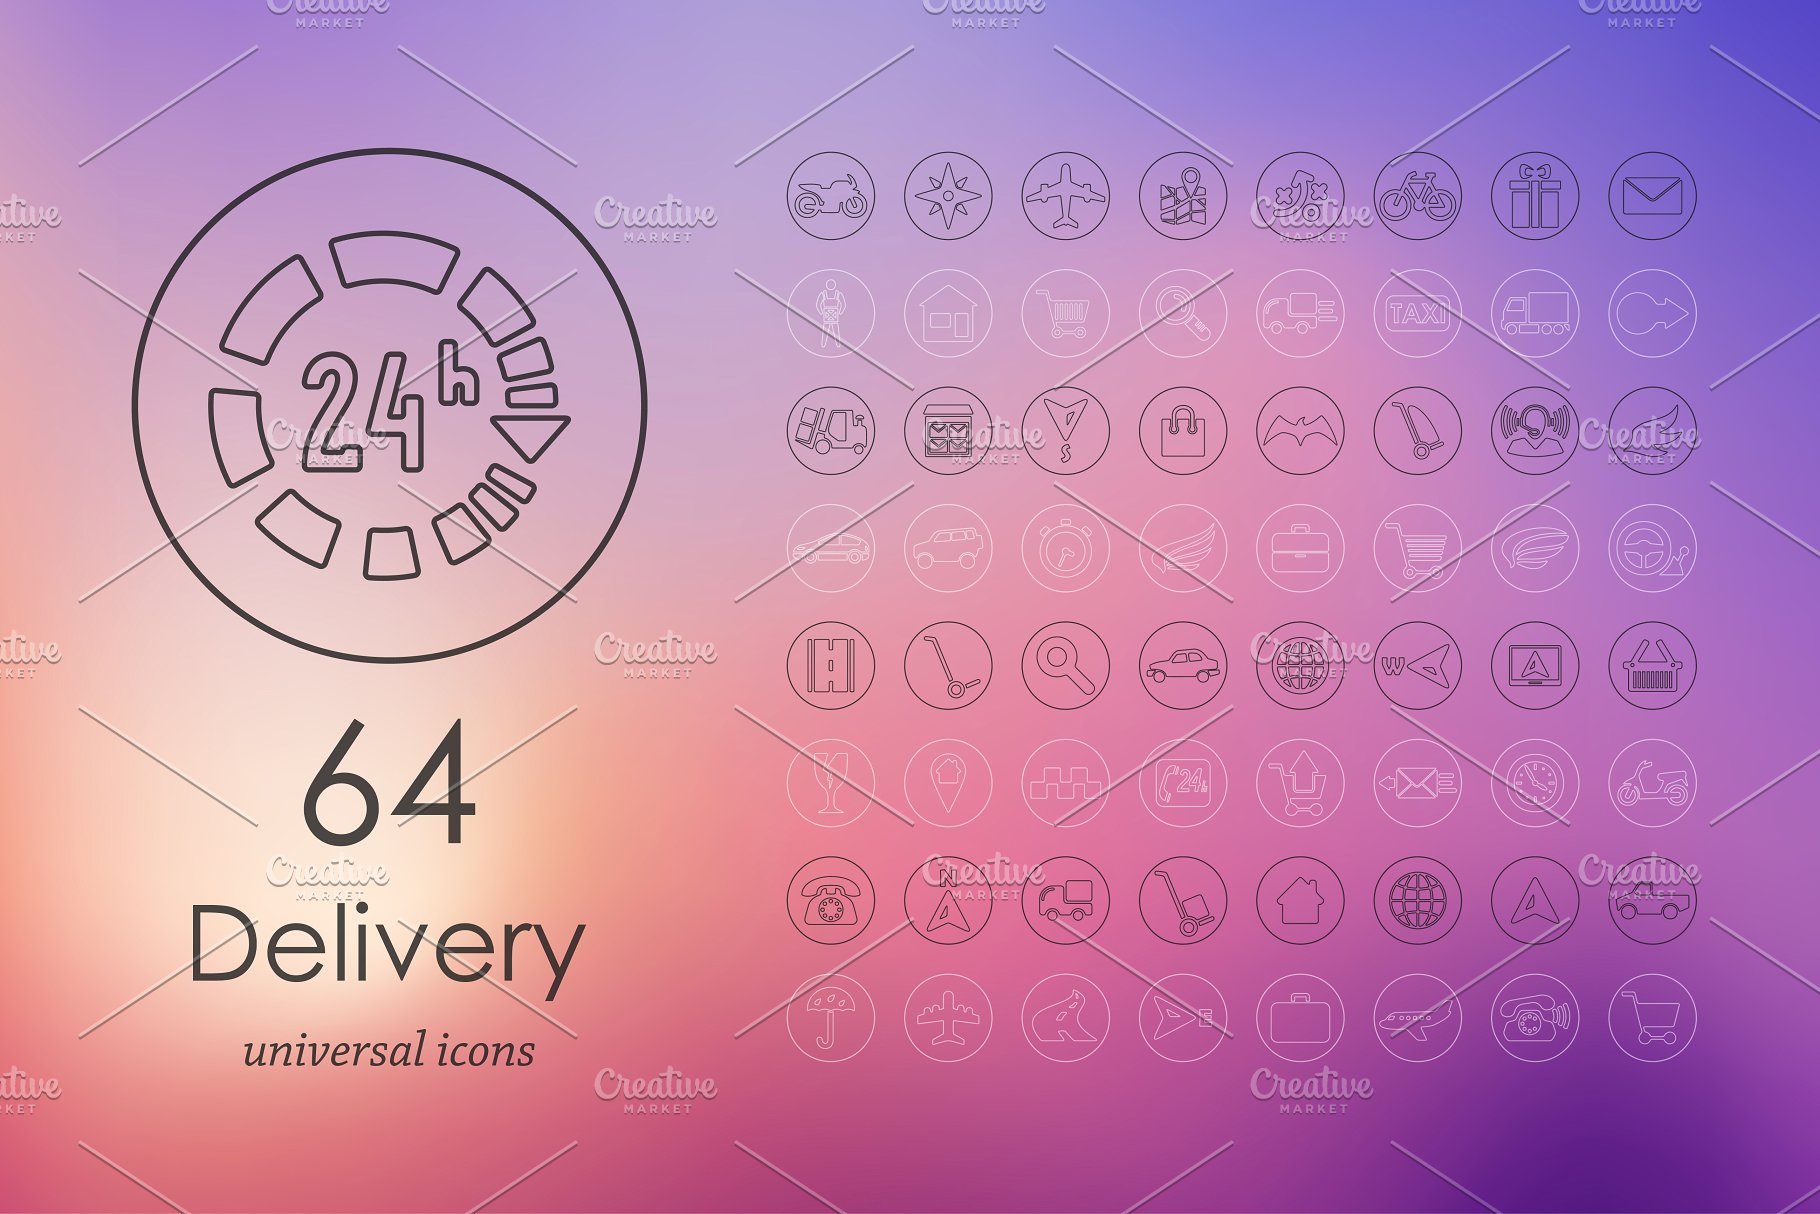 快递主题相关的图标 64 delivery icons #9